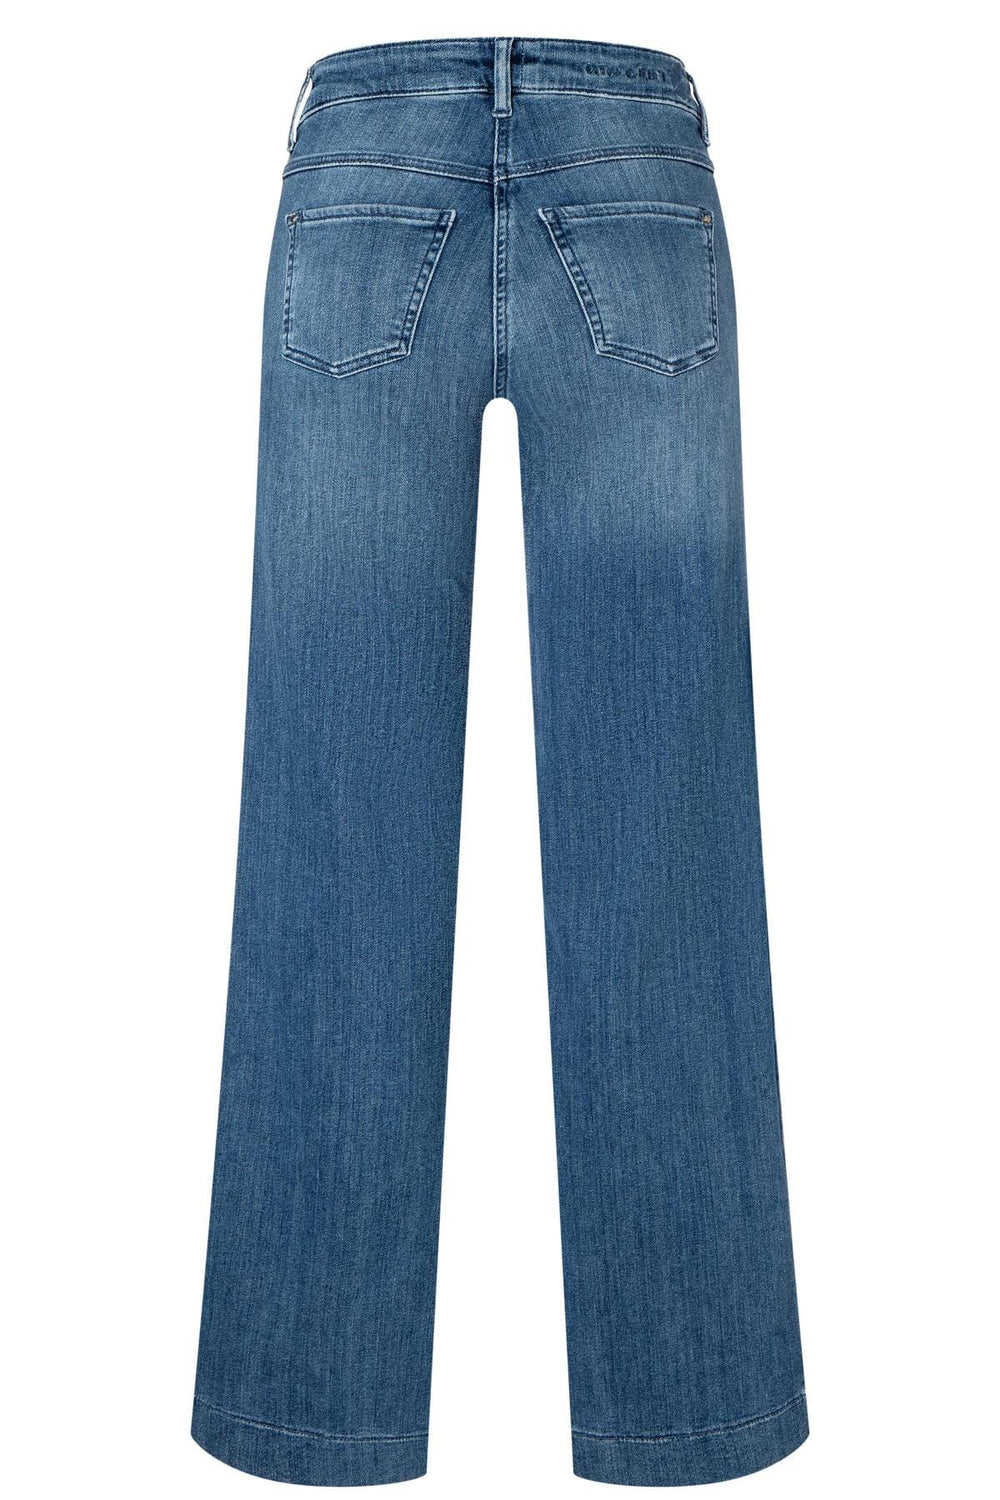 Jean Dream Wide Mac Jeans 